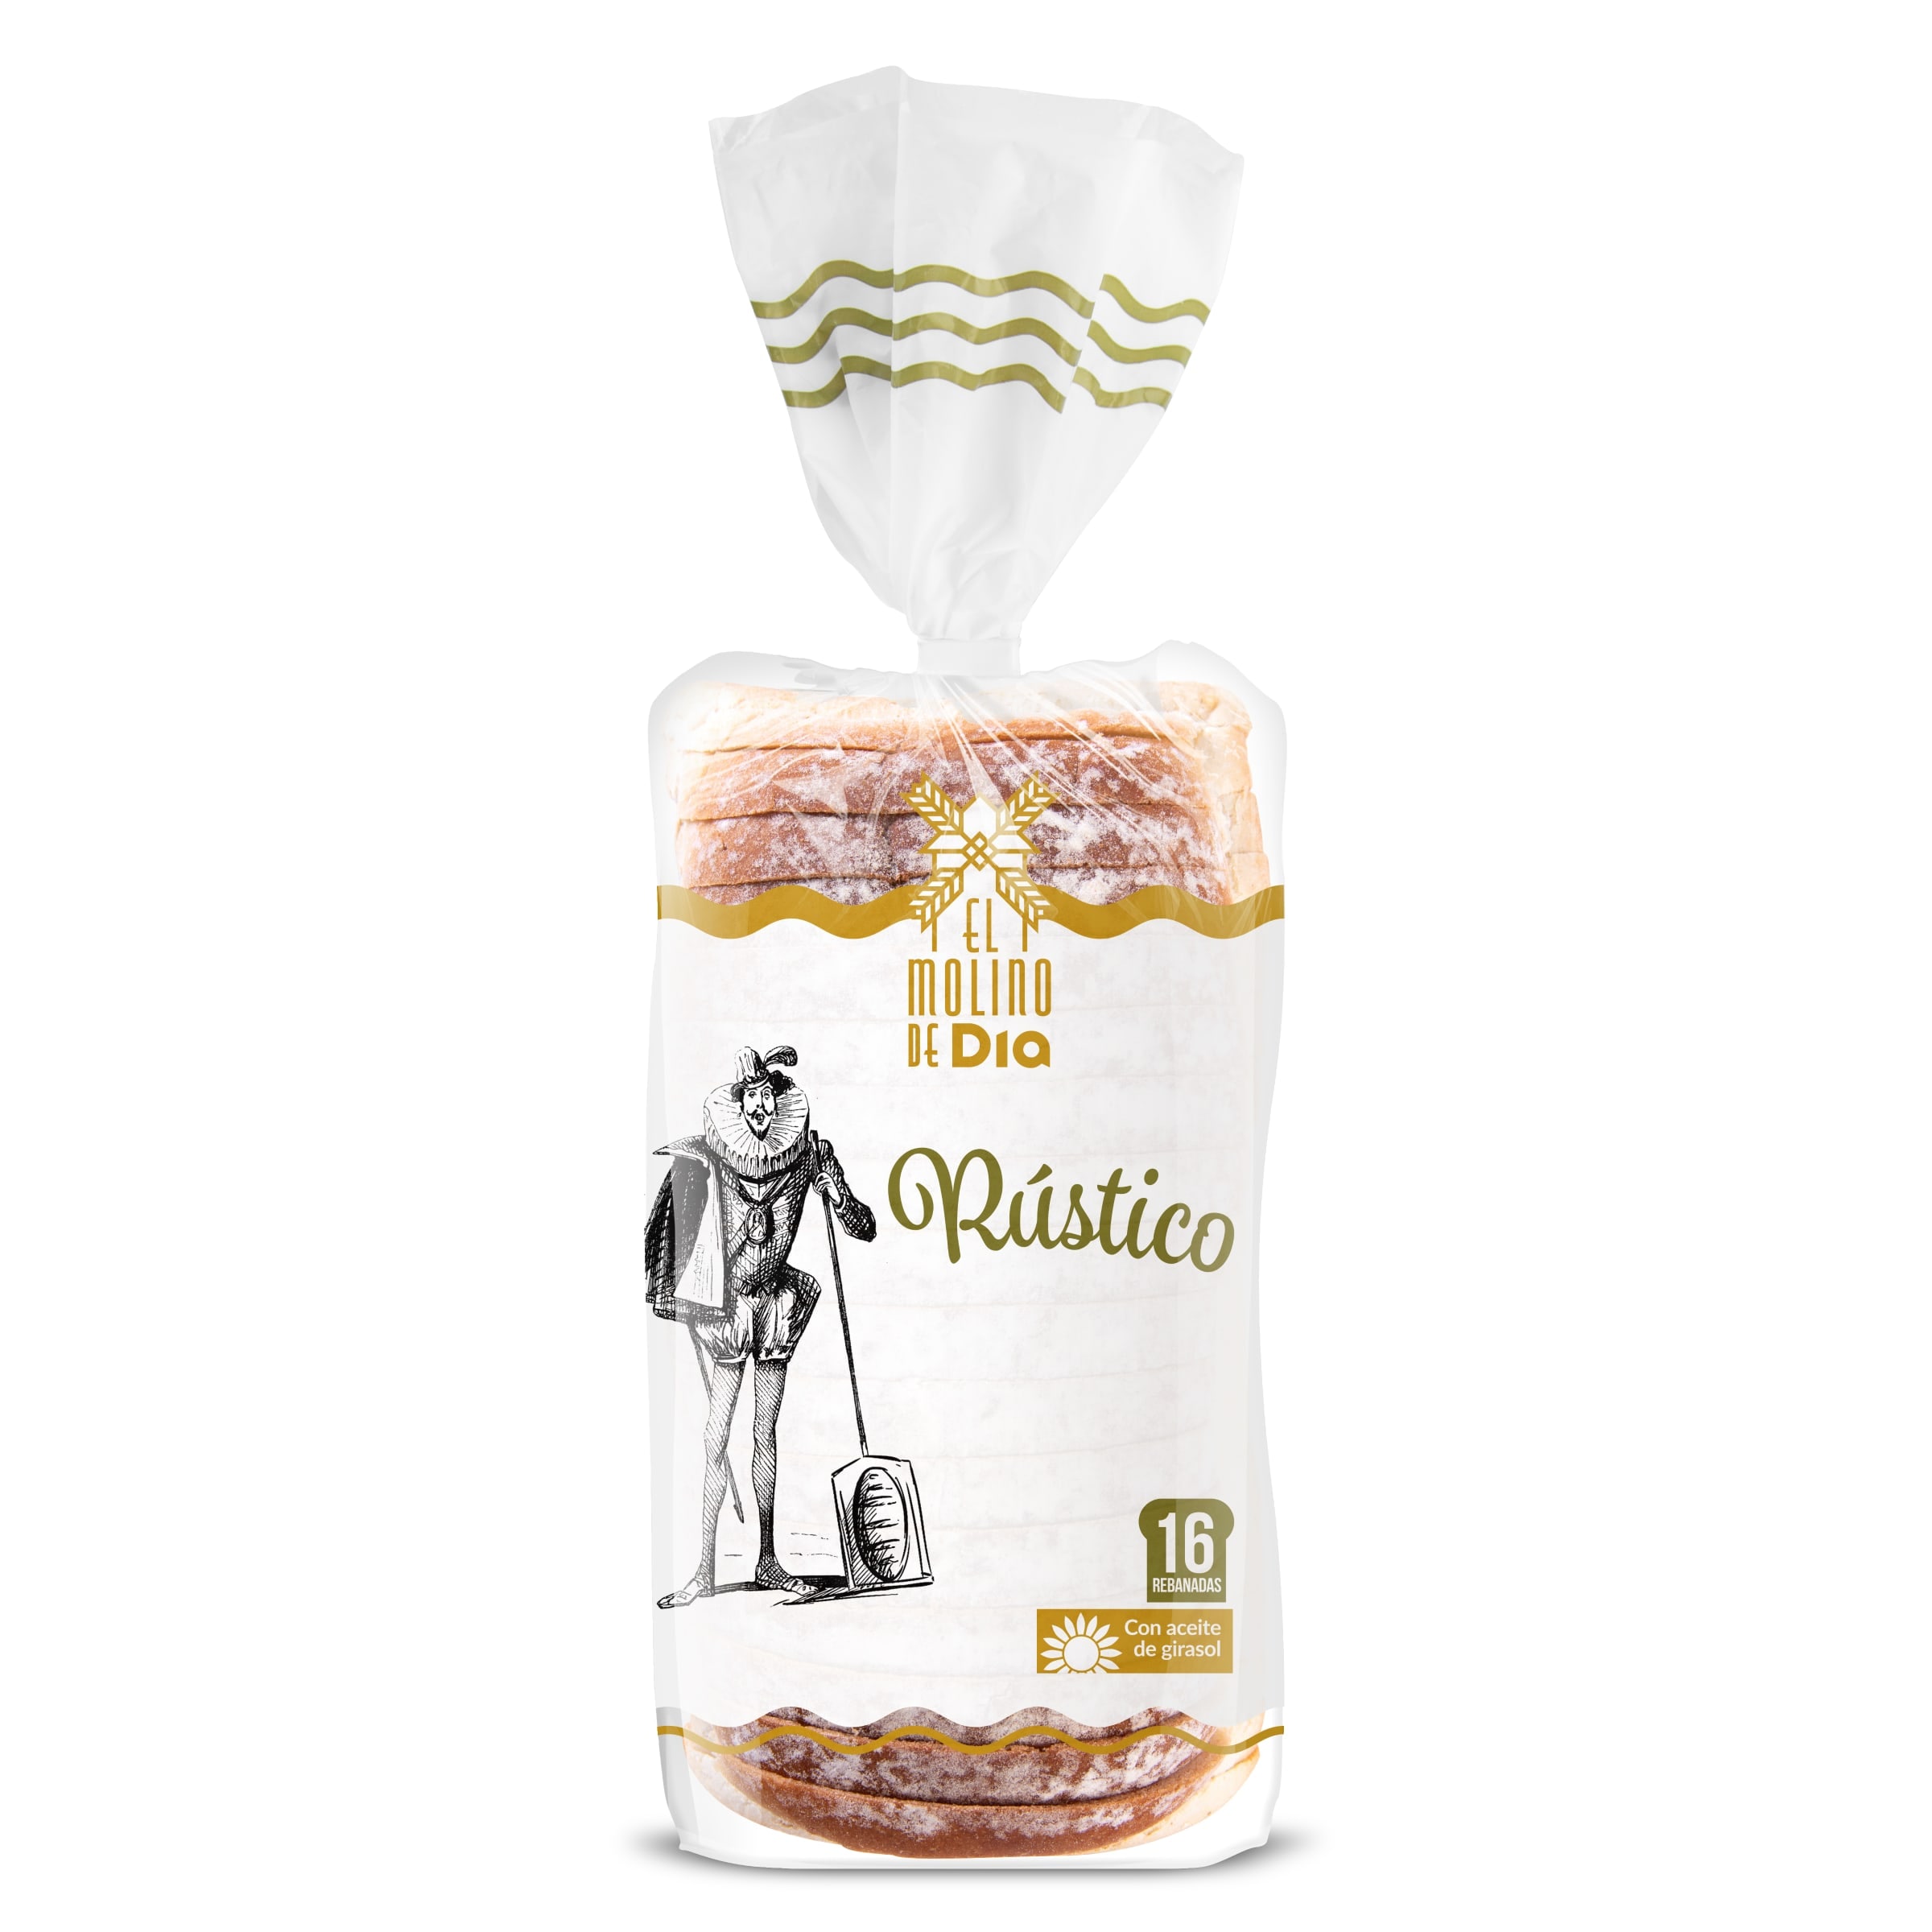 Pan de leche El molino de Dia bolsa 350 g - Supermercados DIA